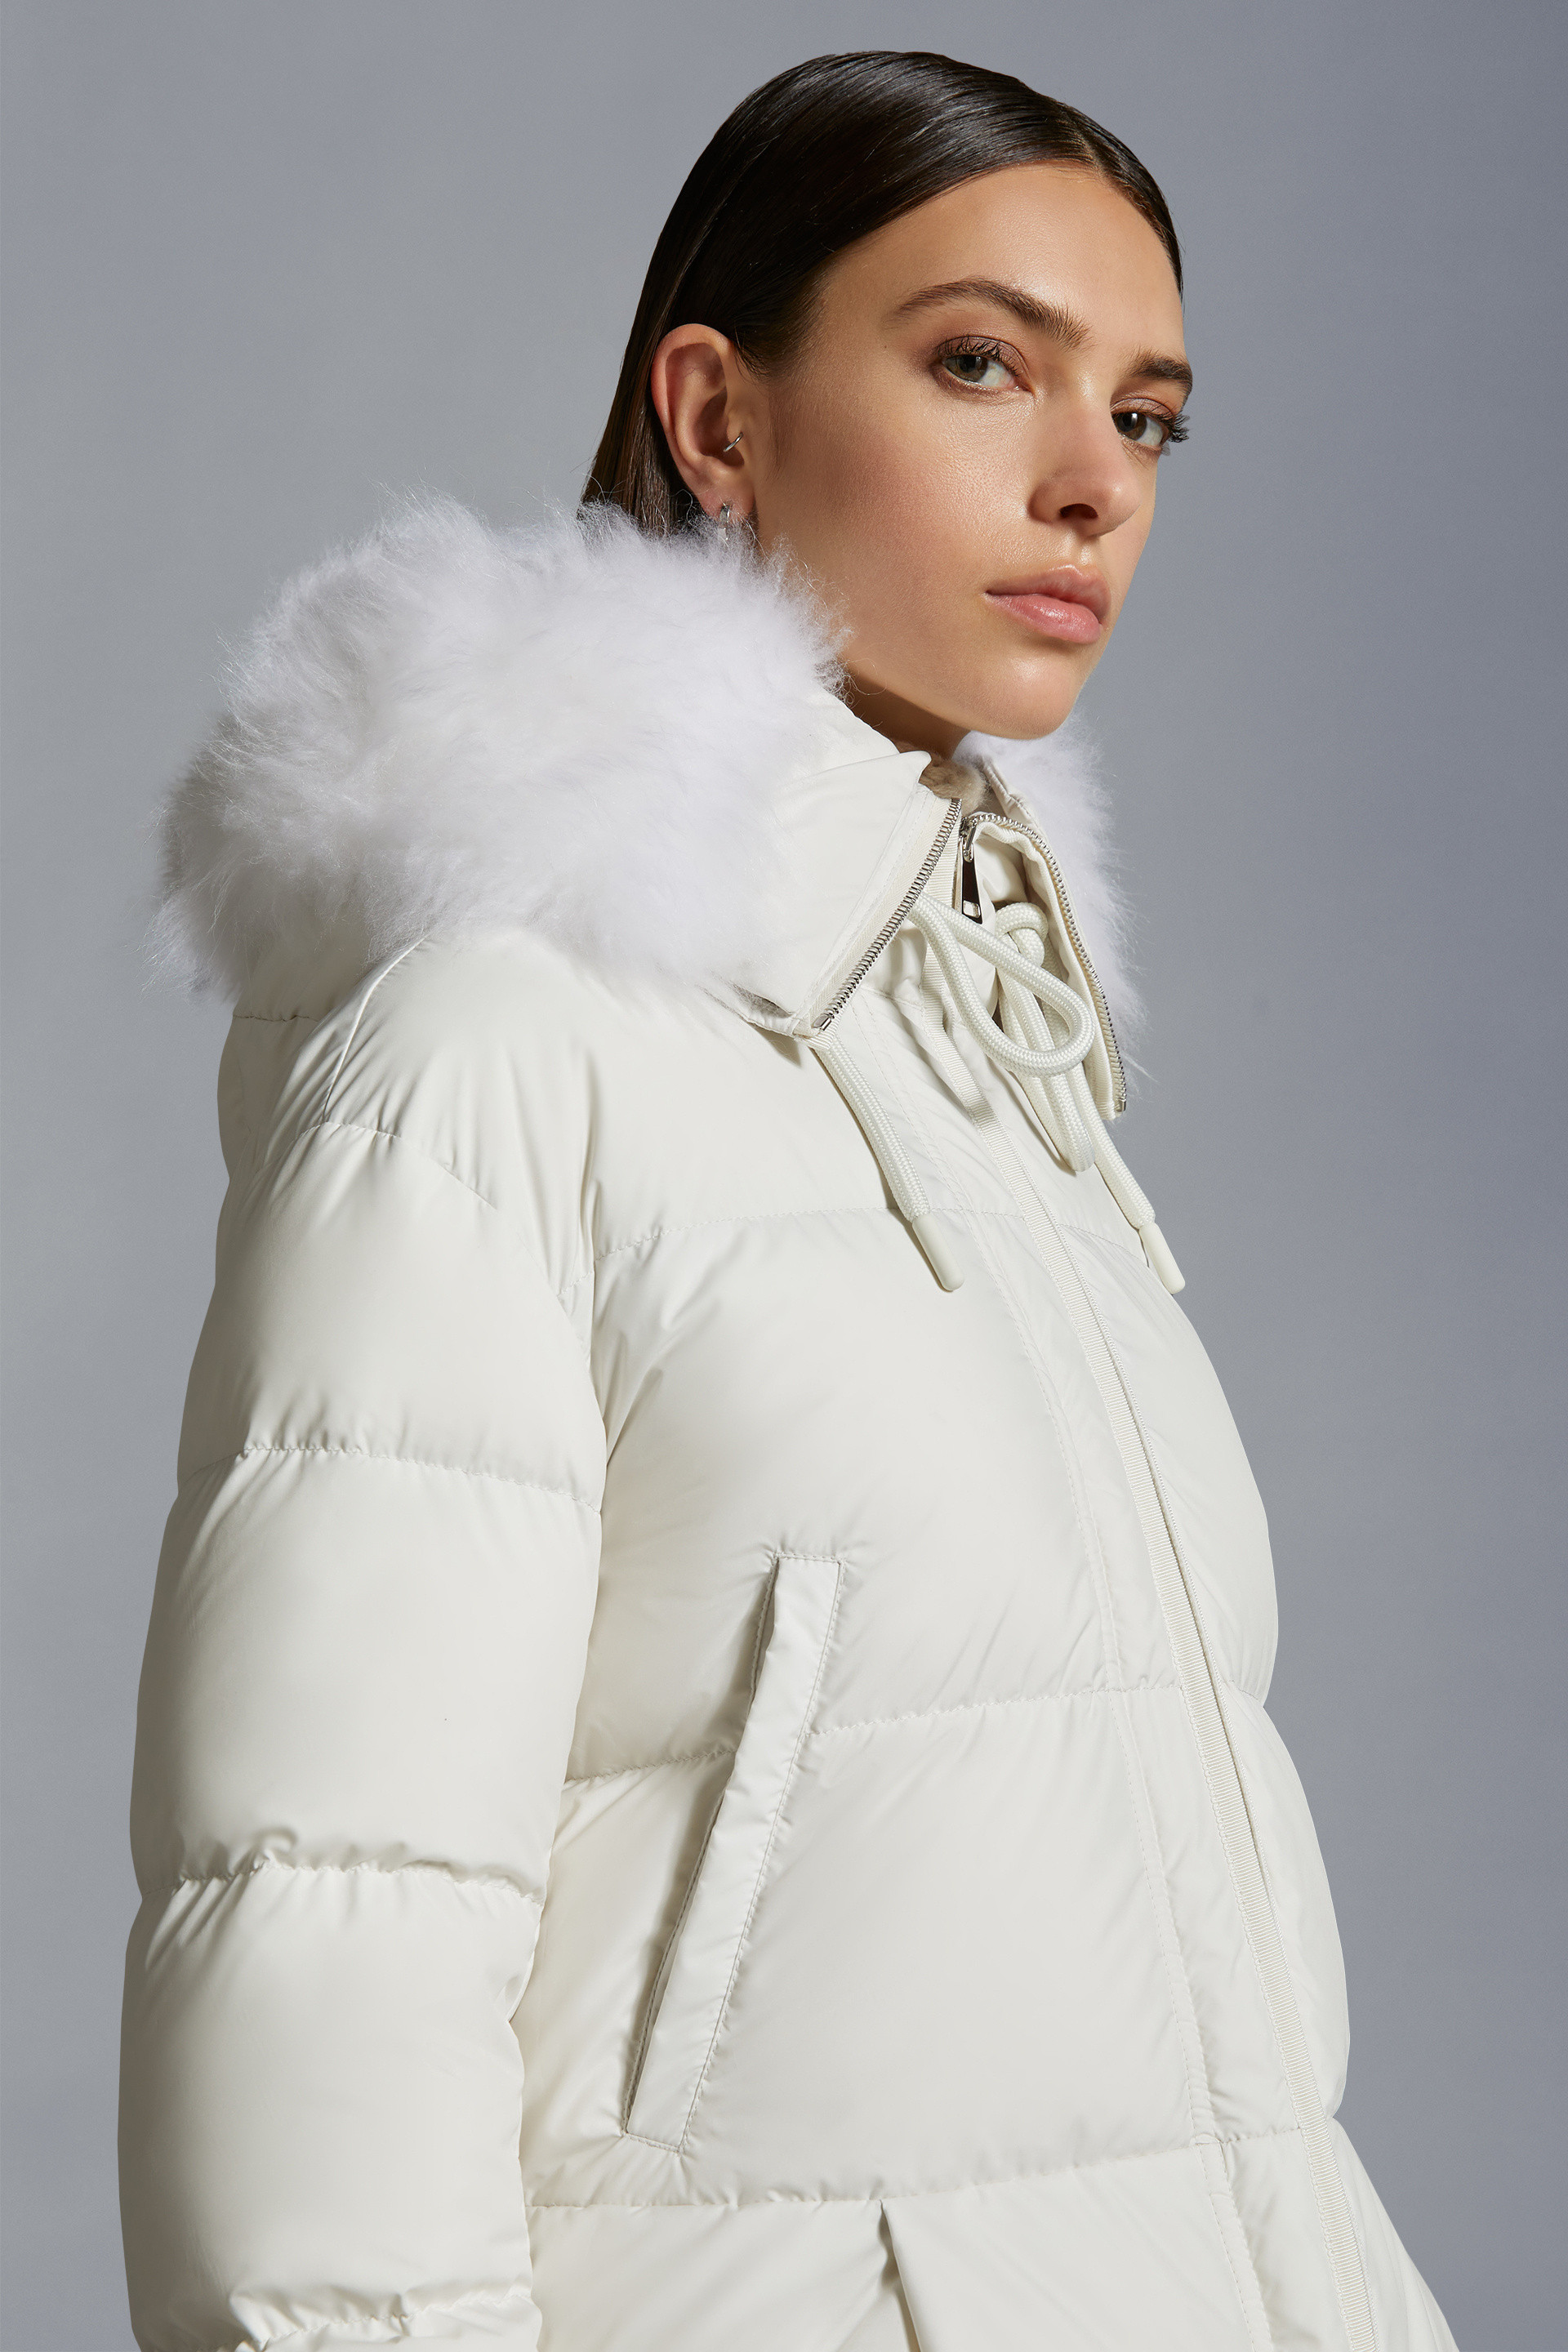 Qiaocaity Fall and Winter Fashion Long Trench Coat, Womens Fall